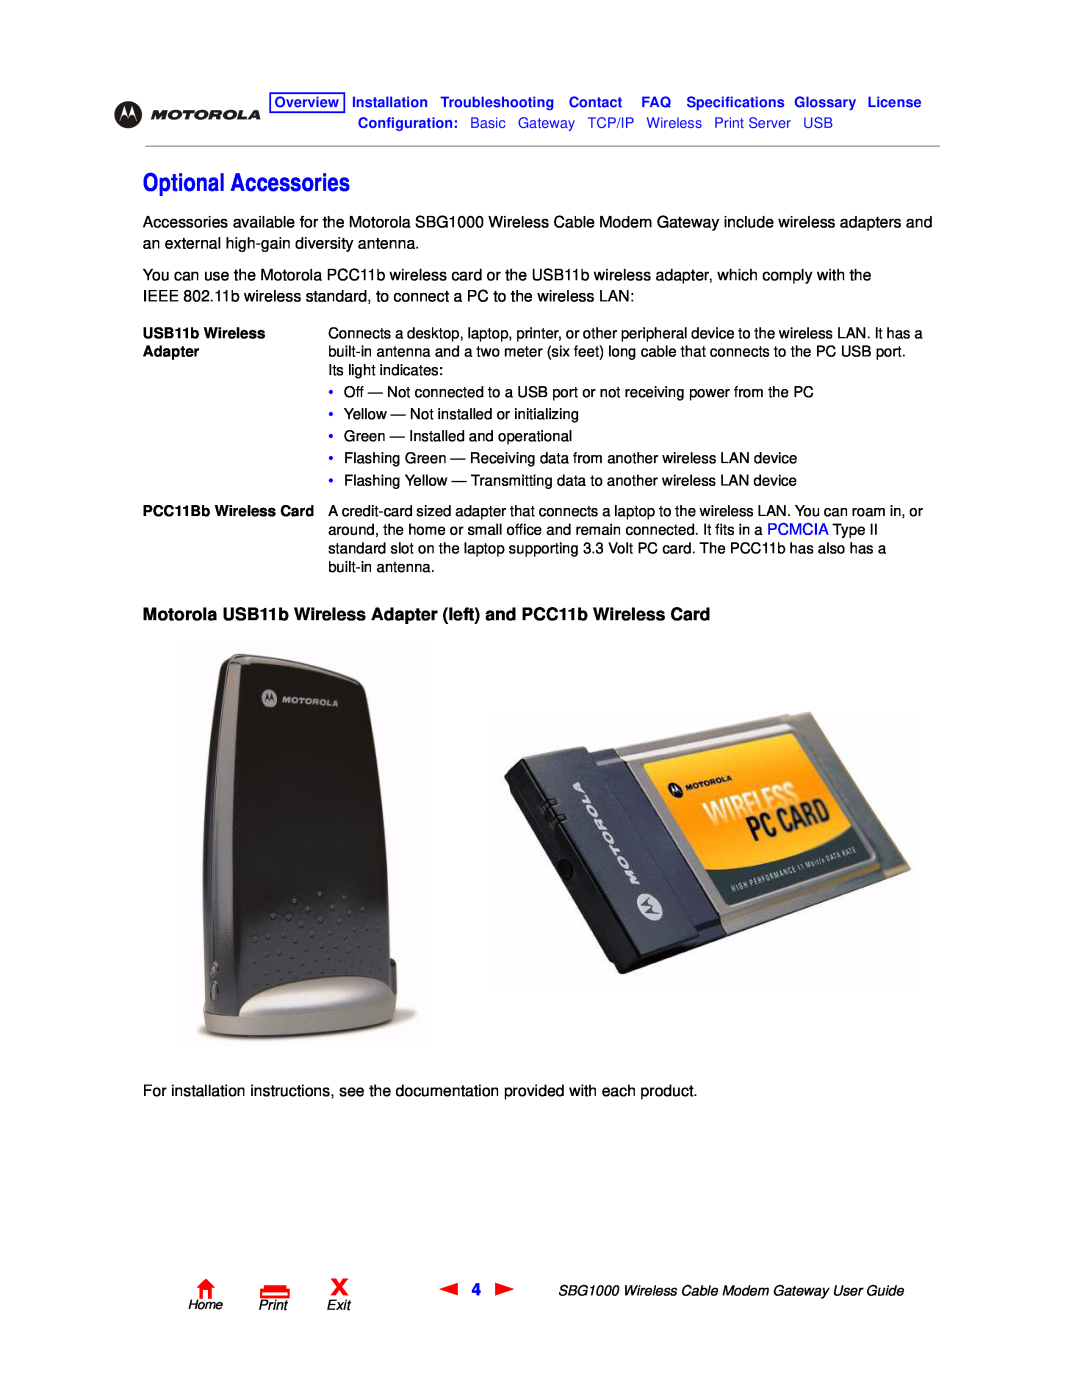 Motorola SBG1000 manual Optional Accessories, Motorola USB11b Wireless Adapter left and PCC11b Wireless Card 